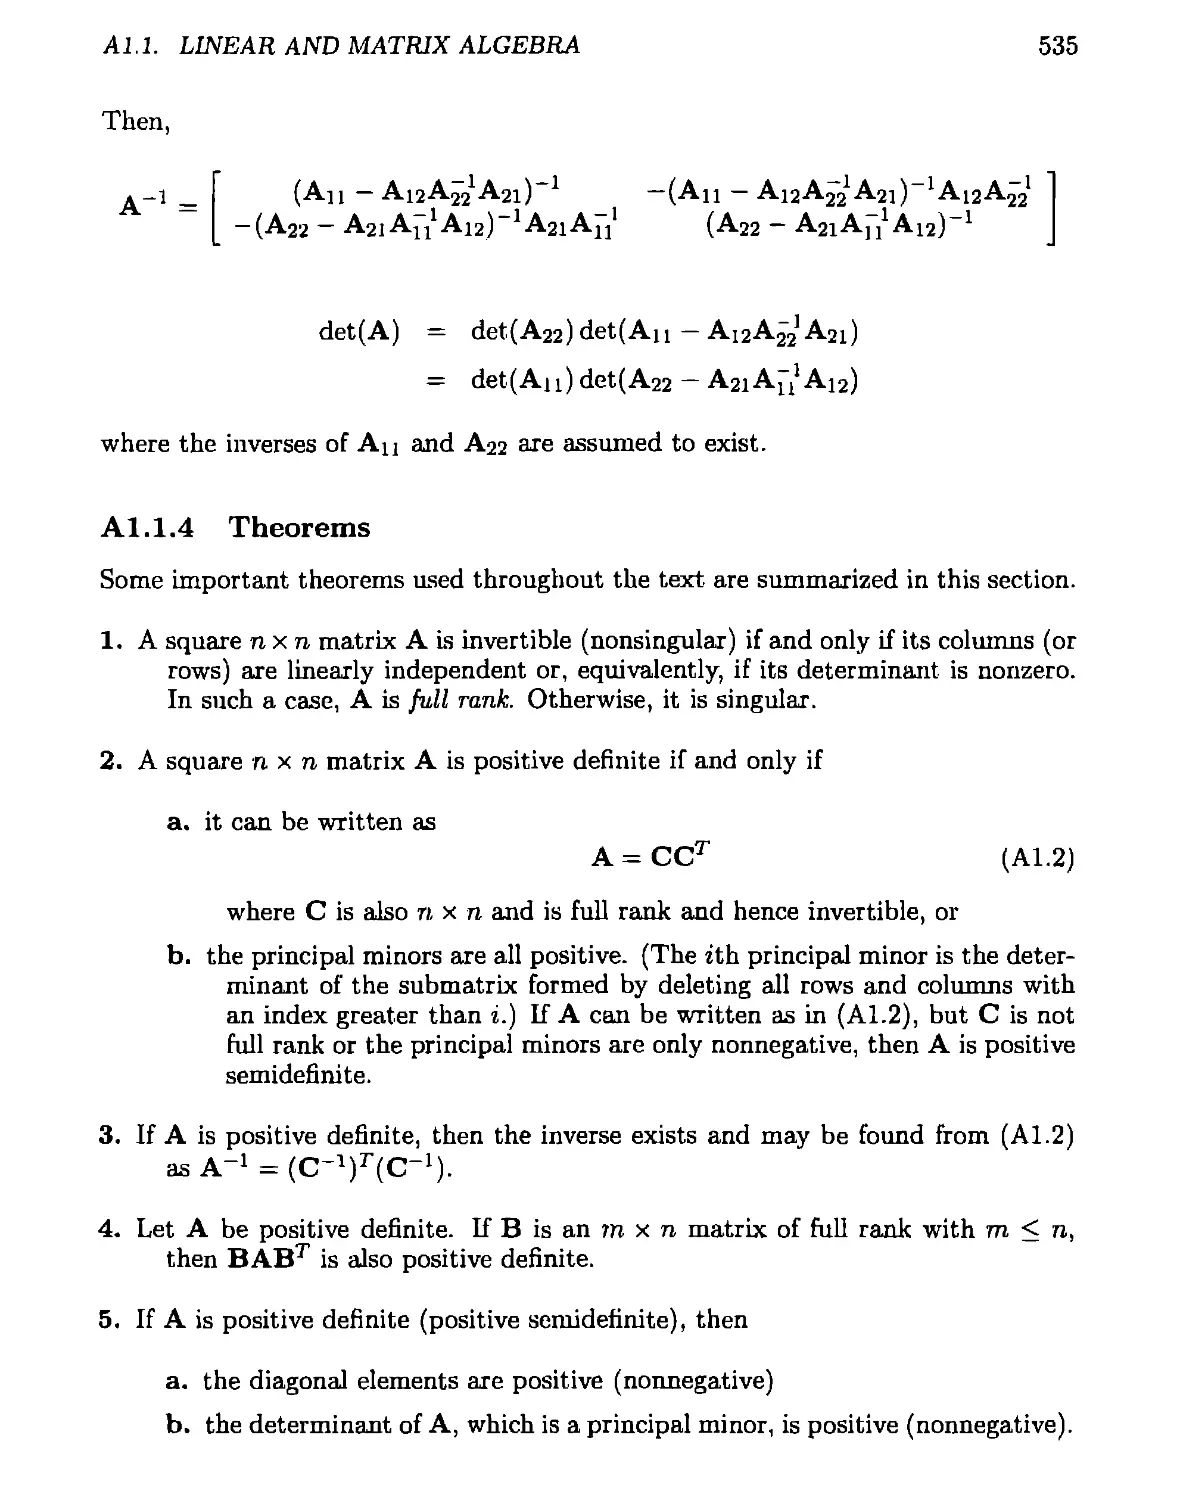 A.1.1.4 Theorems